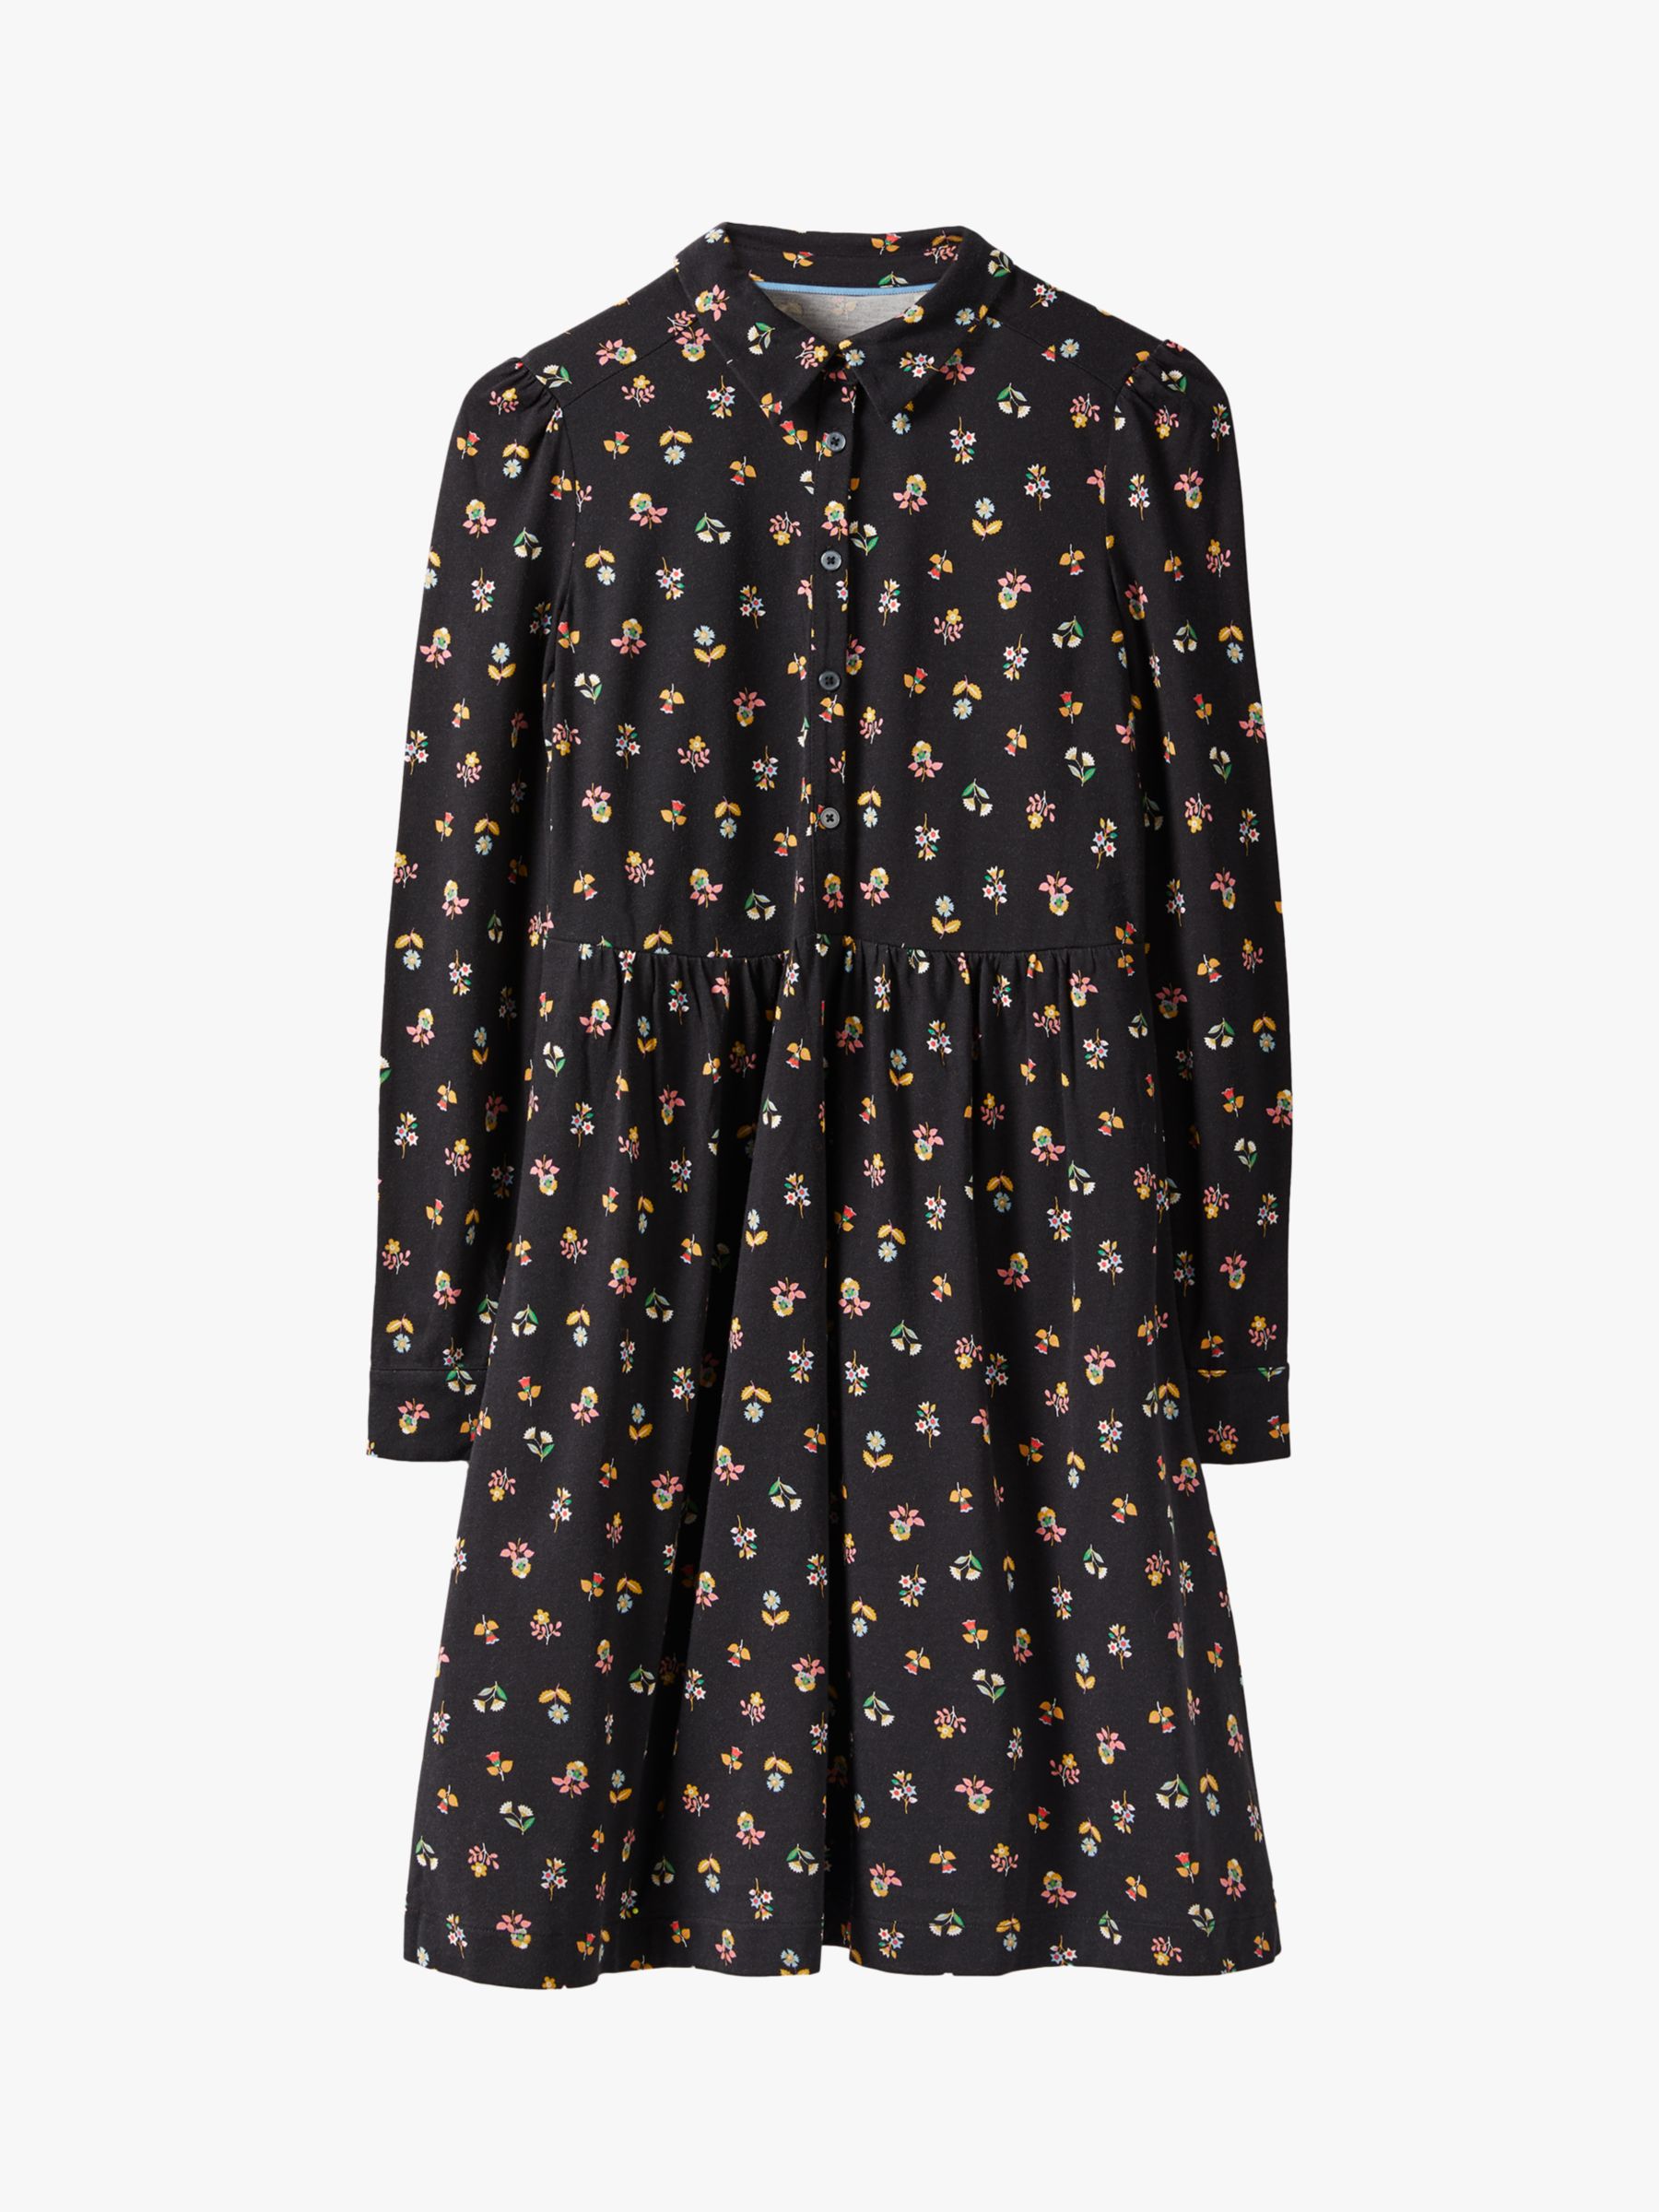 Boden Alma Floral Jersey Shirt Dress, Black/Multi